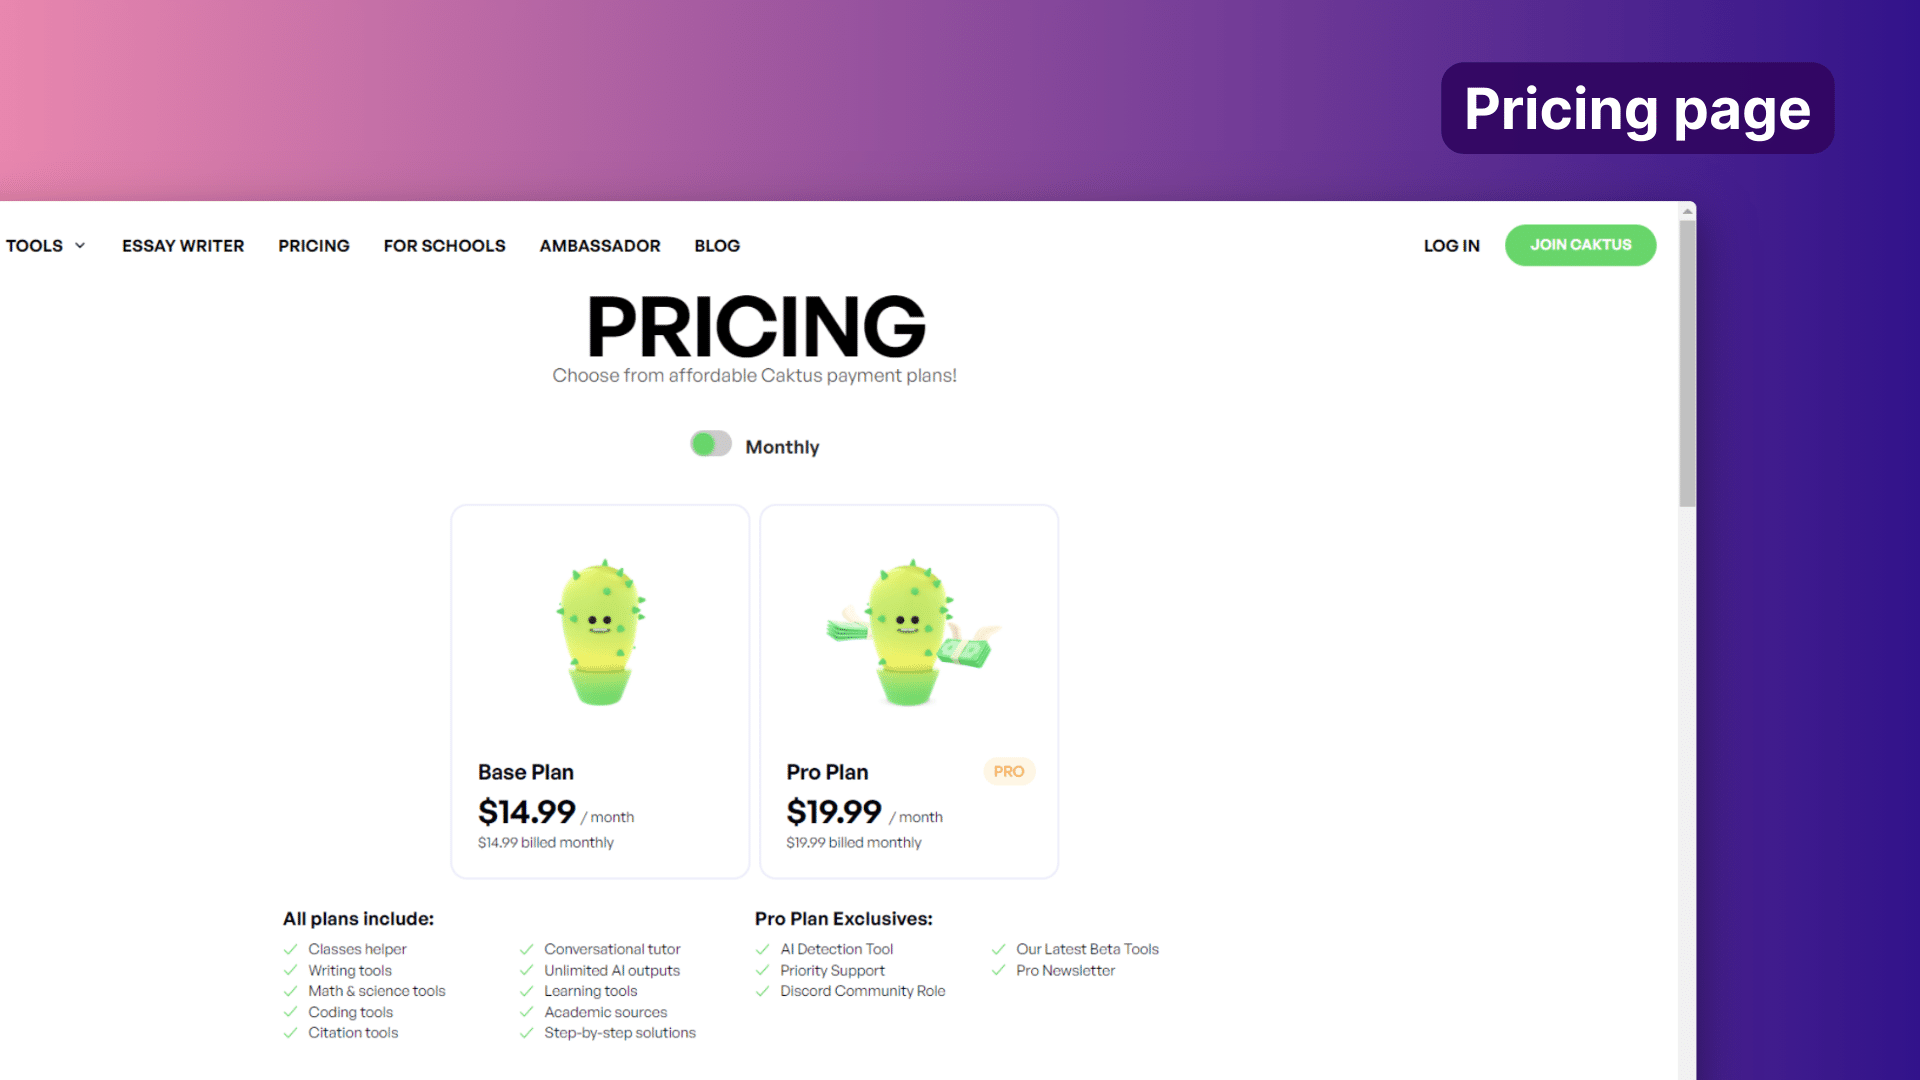 caktus pricing